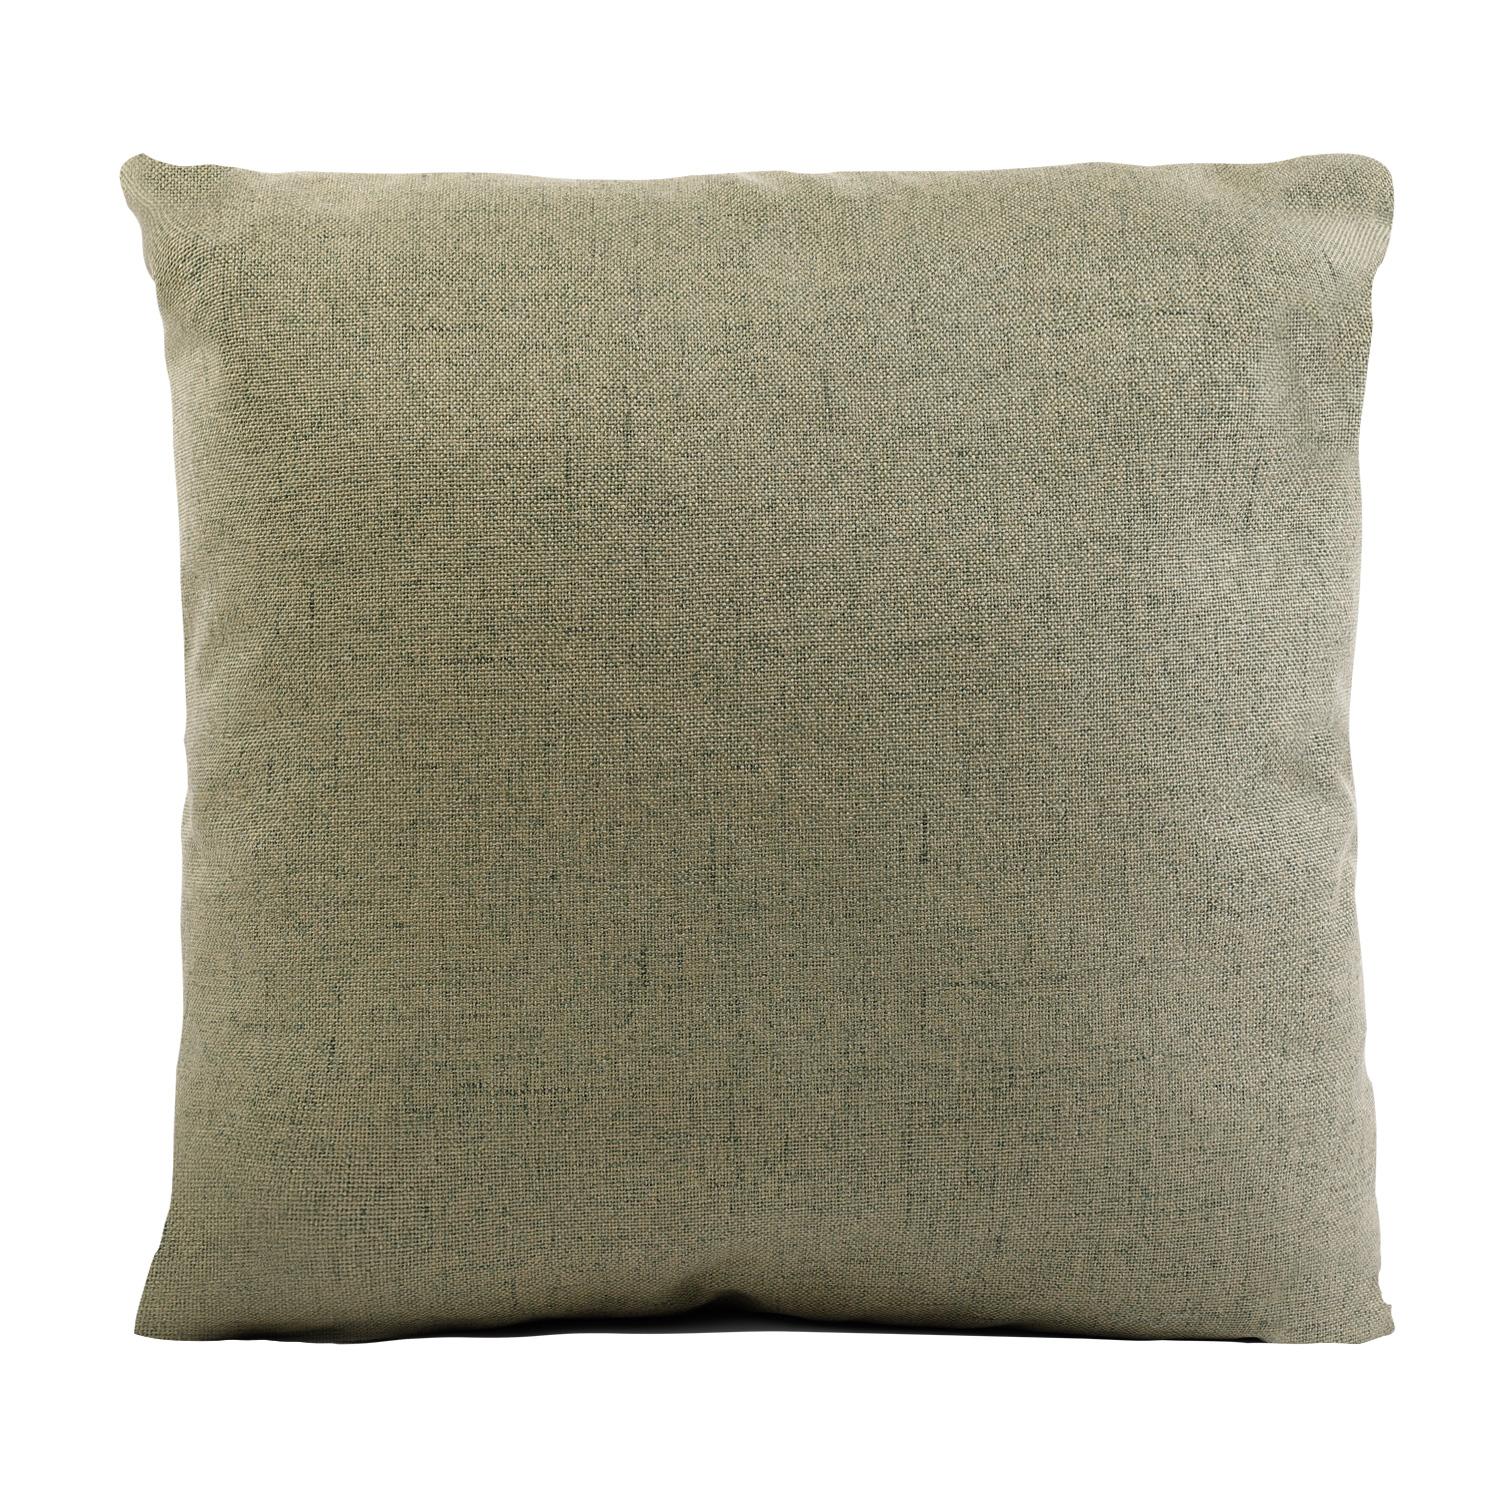 وسادة مربعة 44 * 44 سم - أخضر PARRY LIFE Decorative Jacquard Cushion Pillow